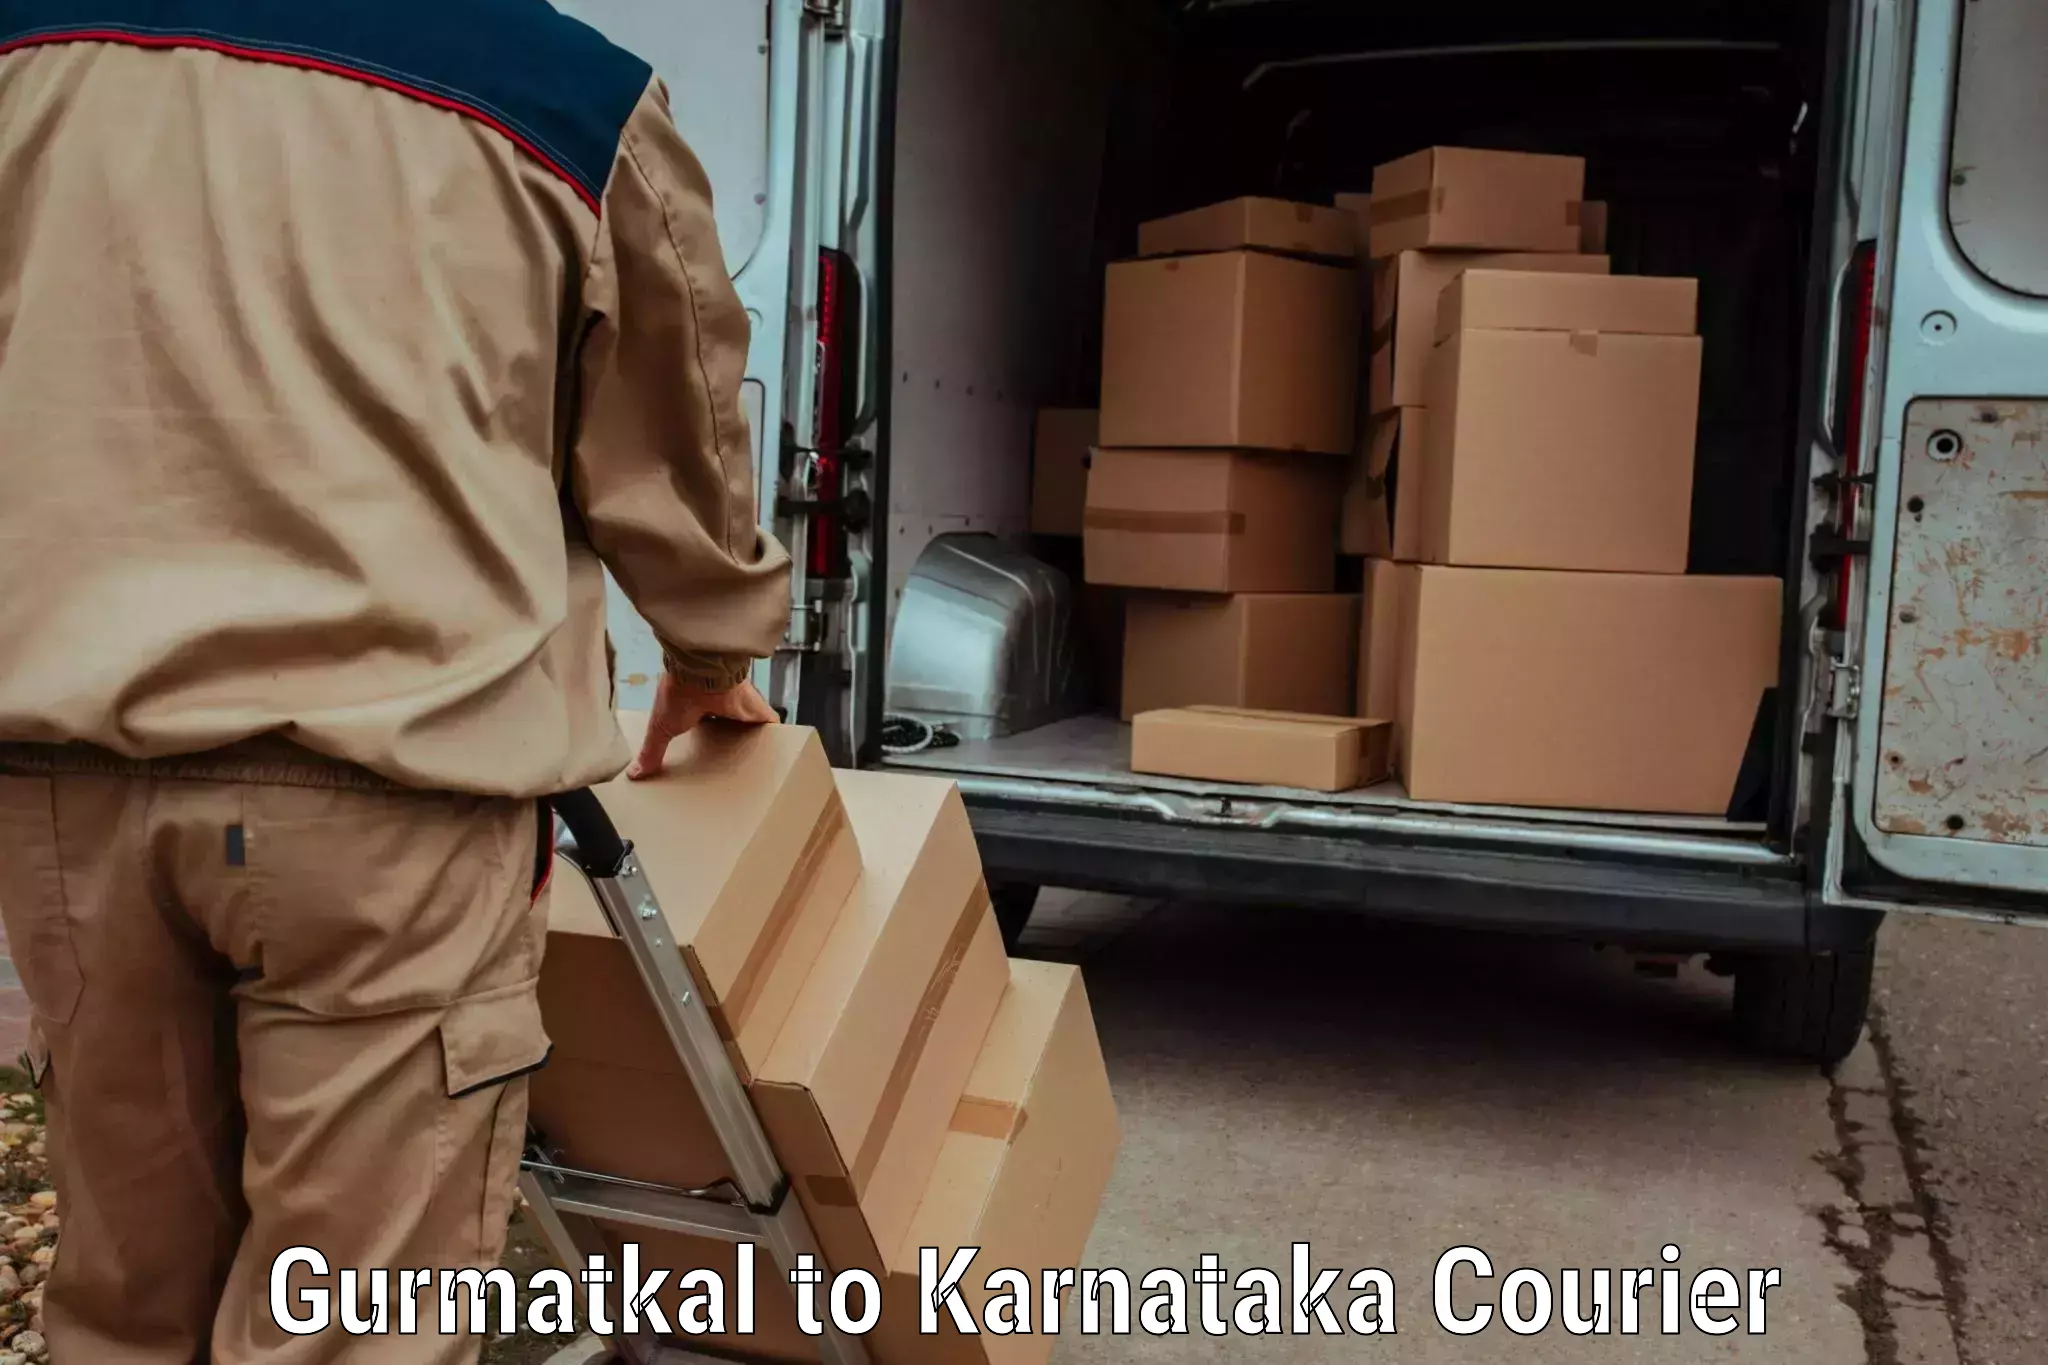 State-of-the-art courier technology Gurmatkal to Channarayapatna